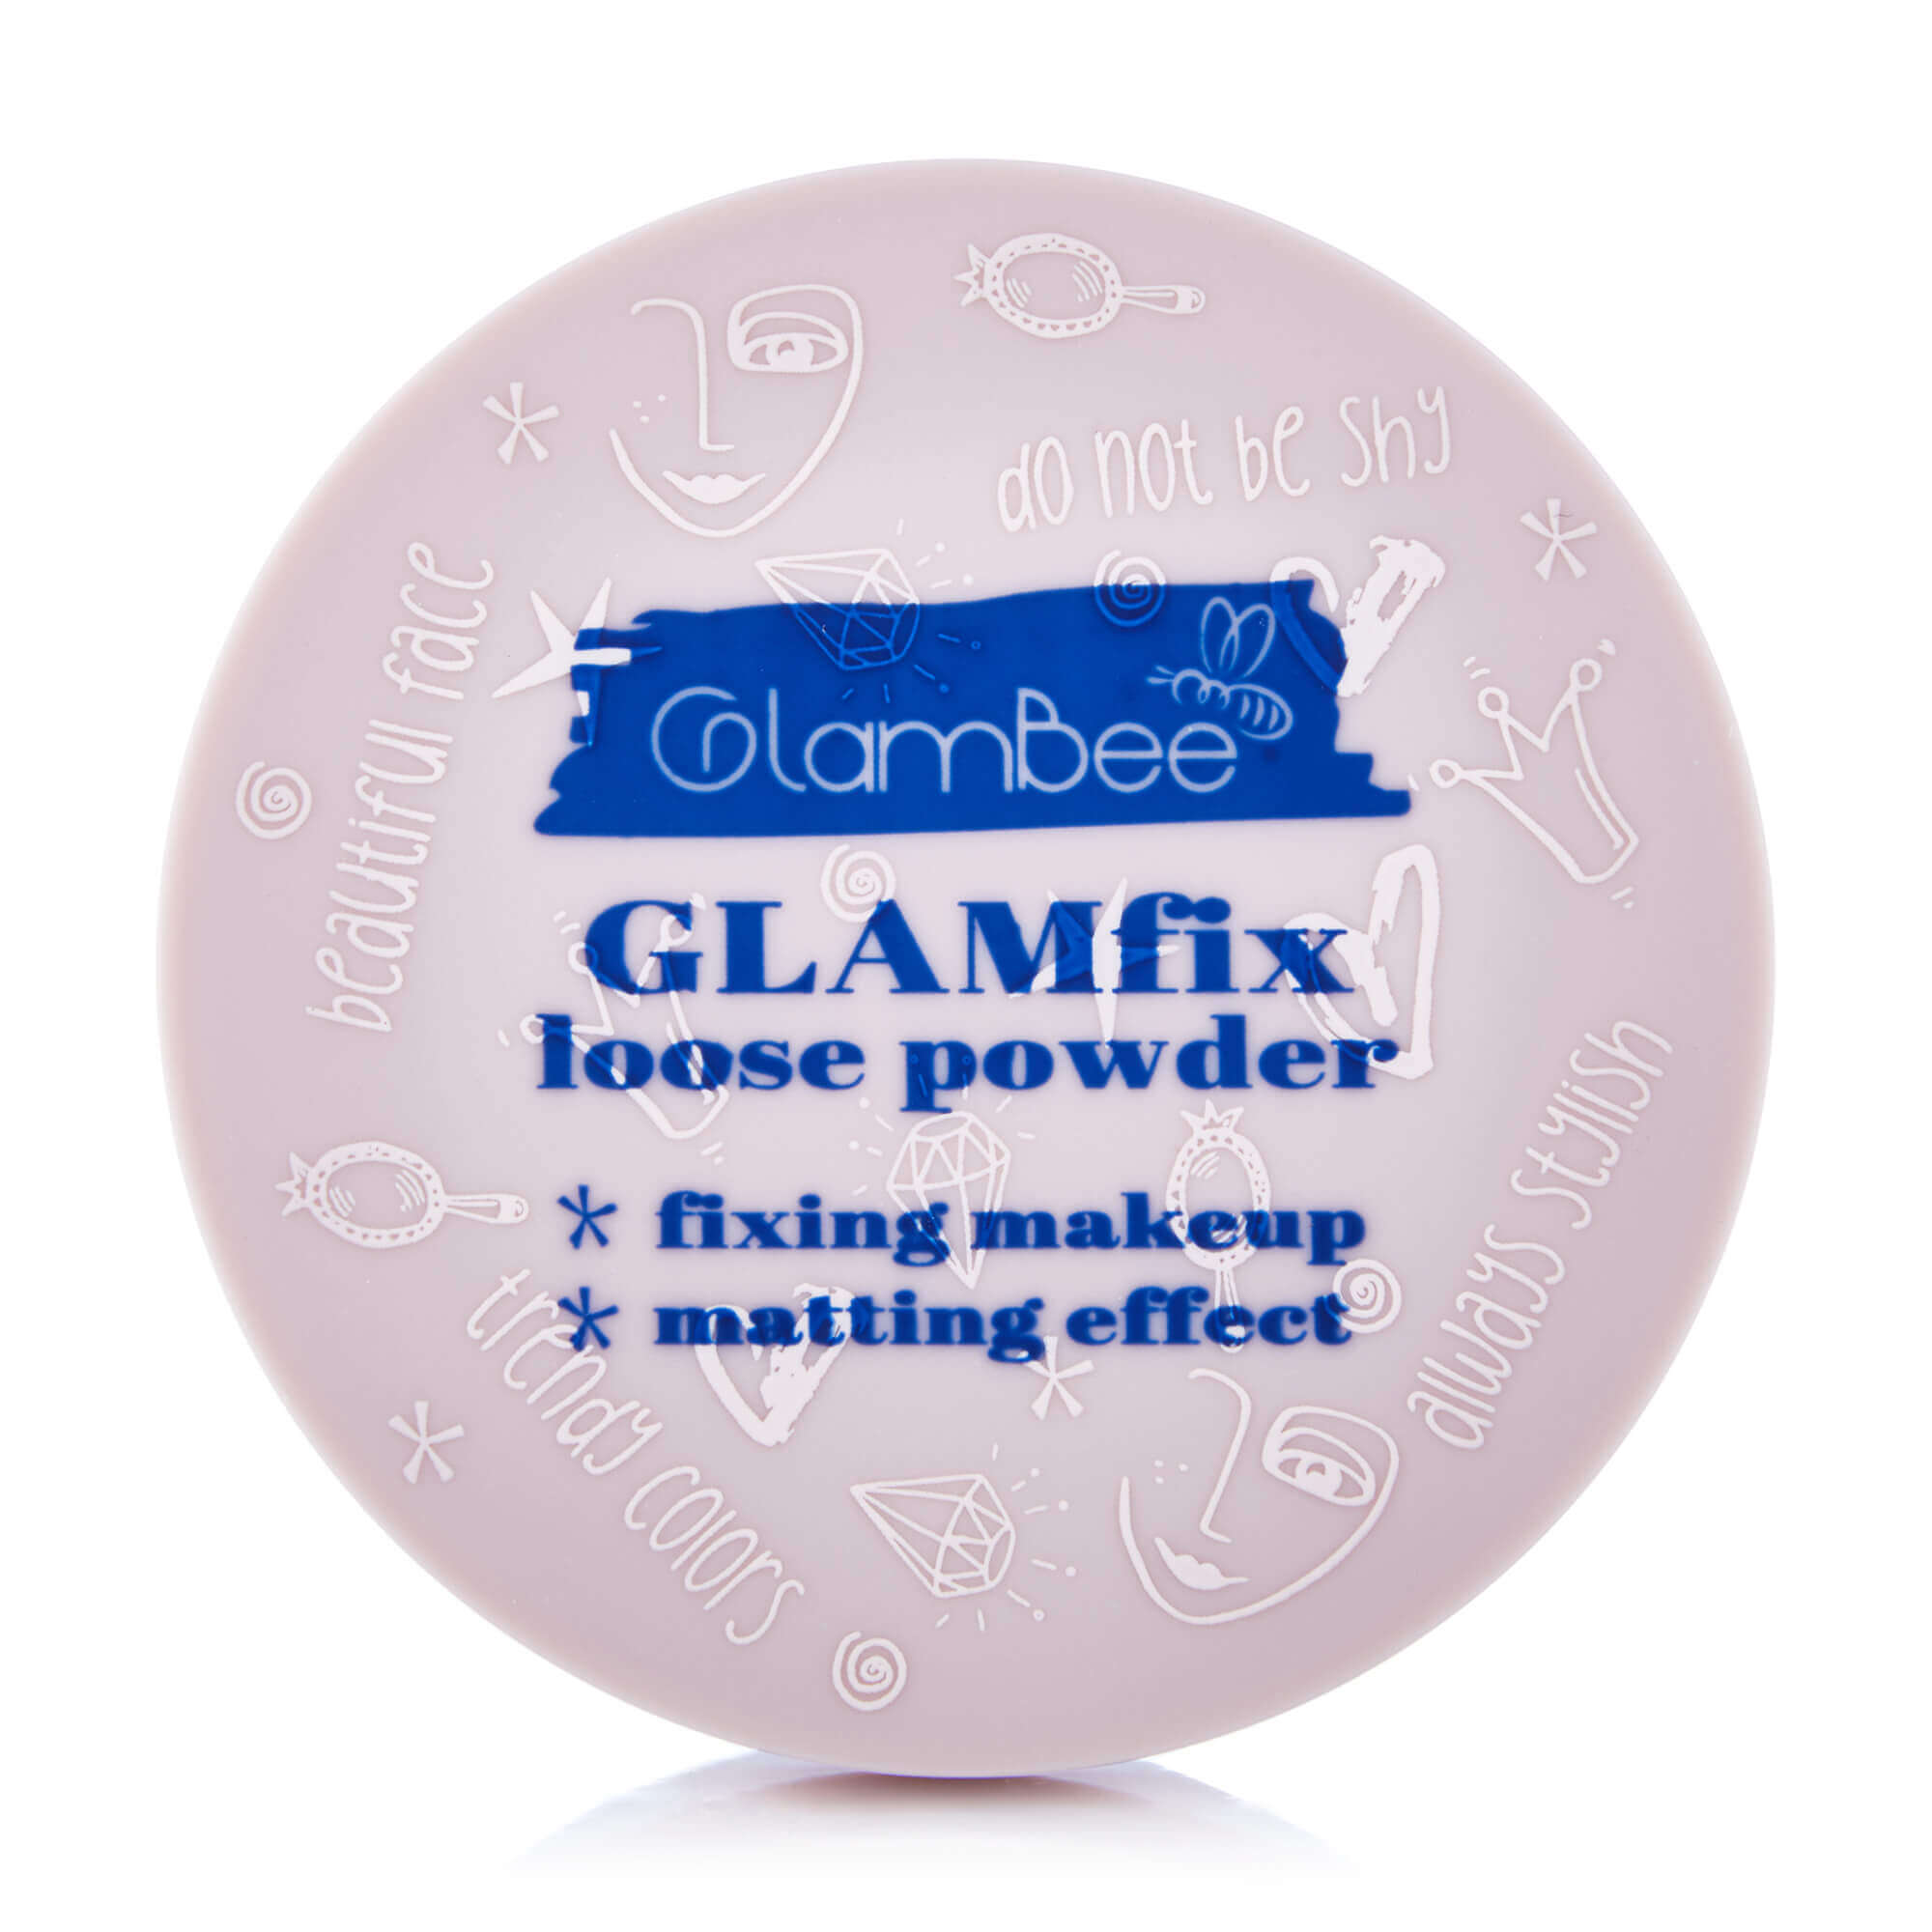 Розсипчаста пудра для обличчя GlamBee Glamfix loose powder тон 01, 6.2 г